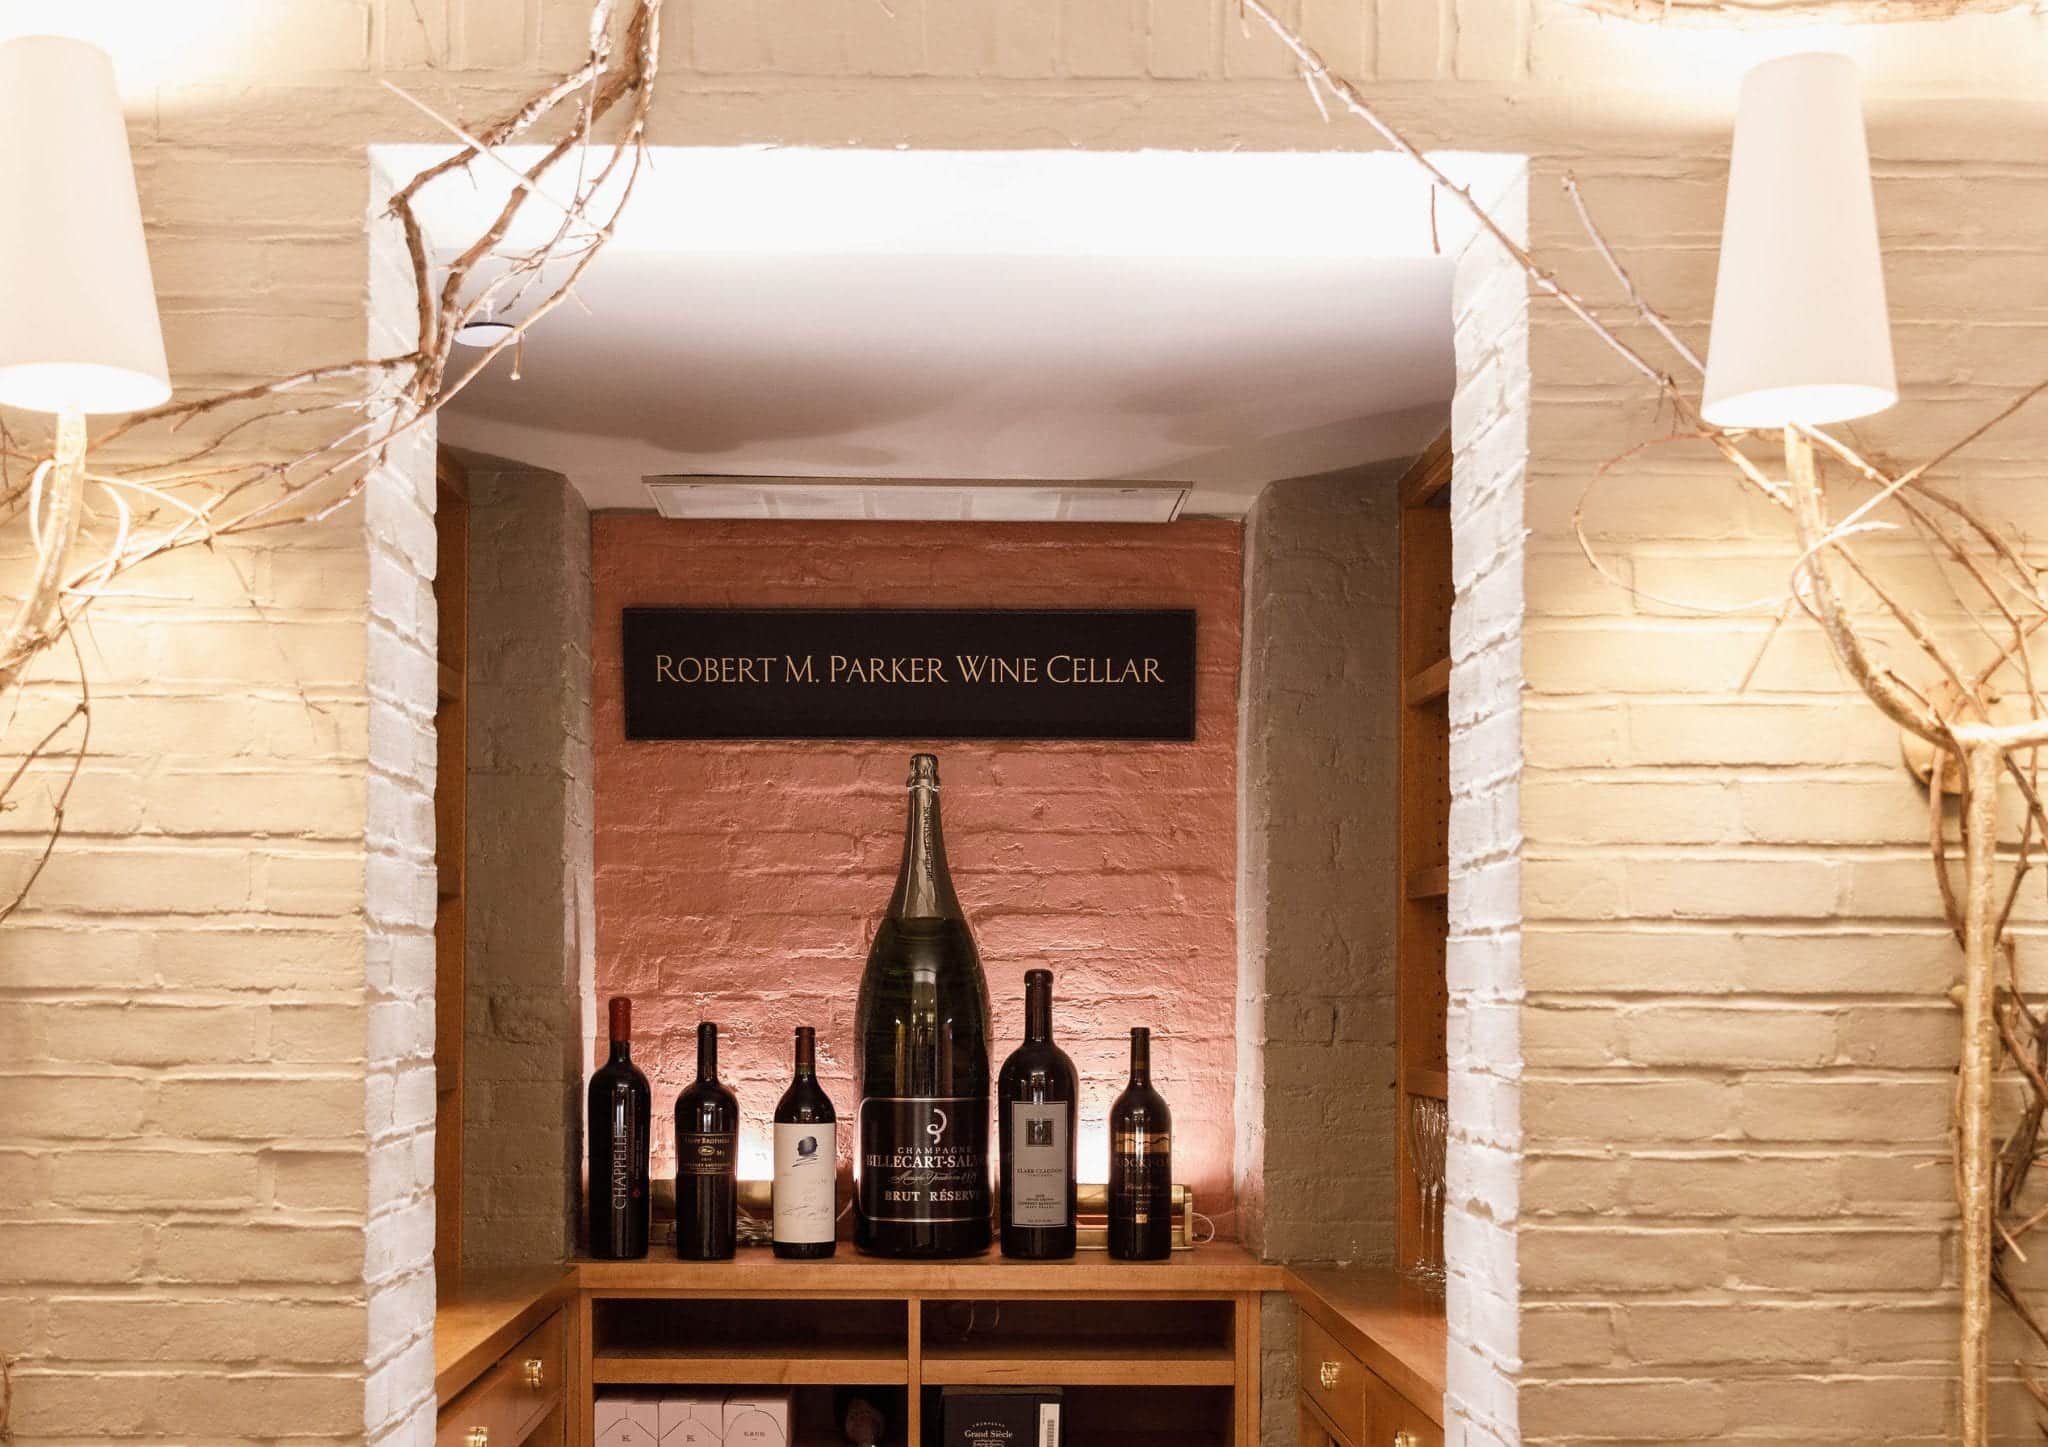 Wine on display under the Robert Parker Wine Cellar sign in Magdalena Restaurant.